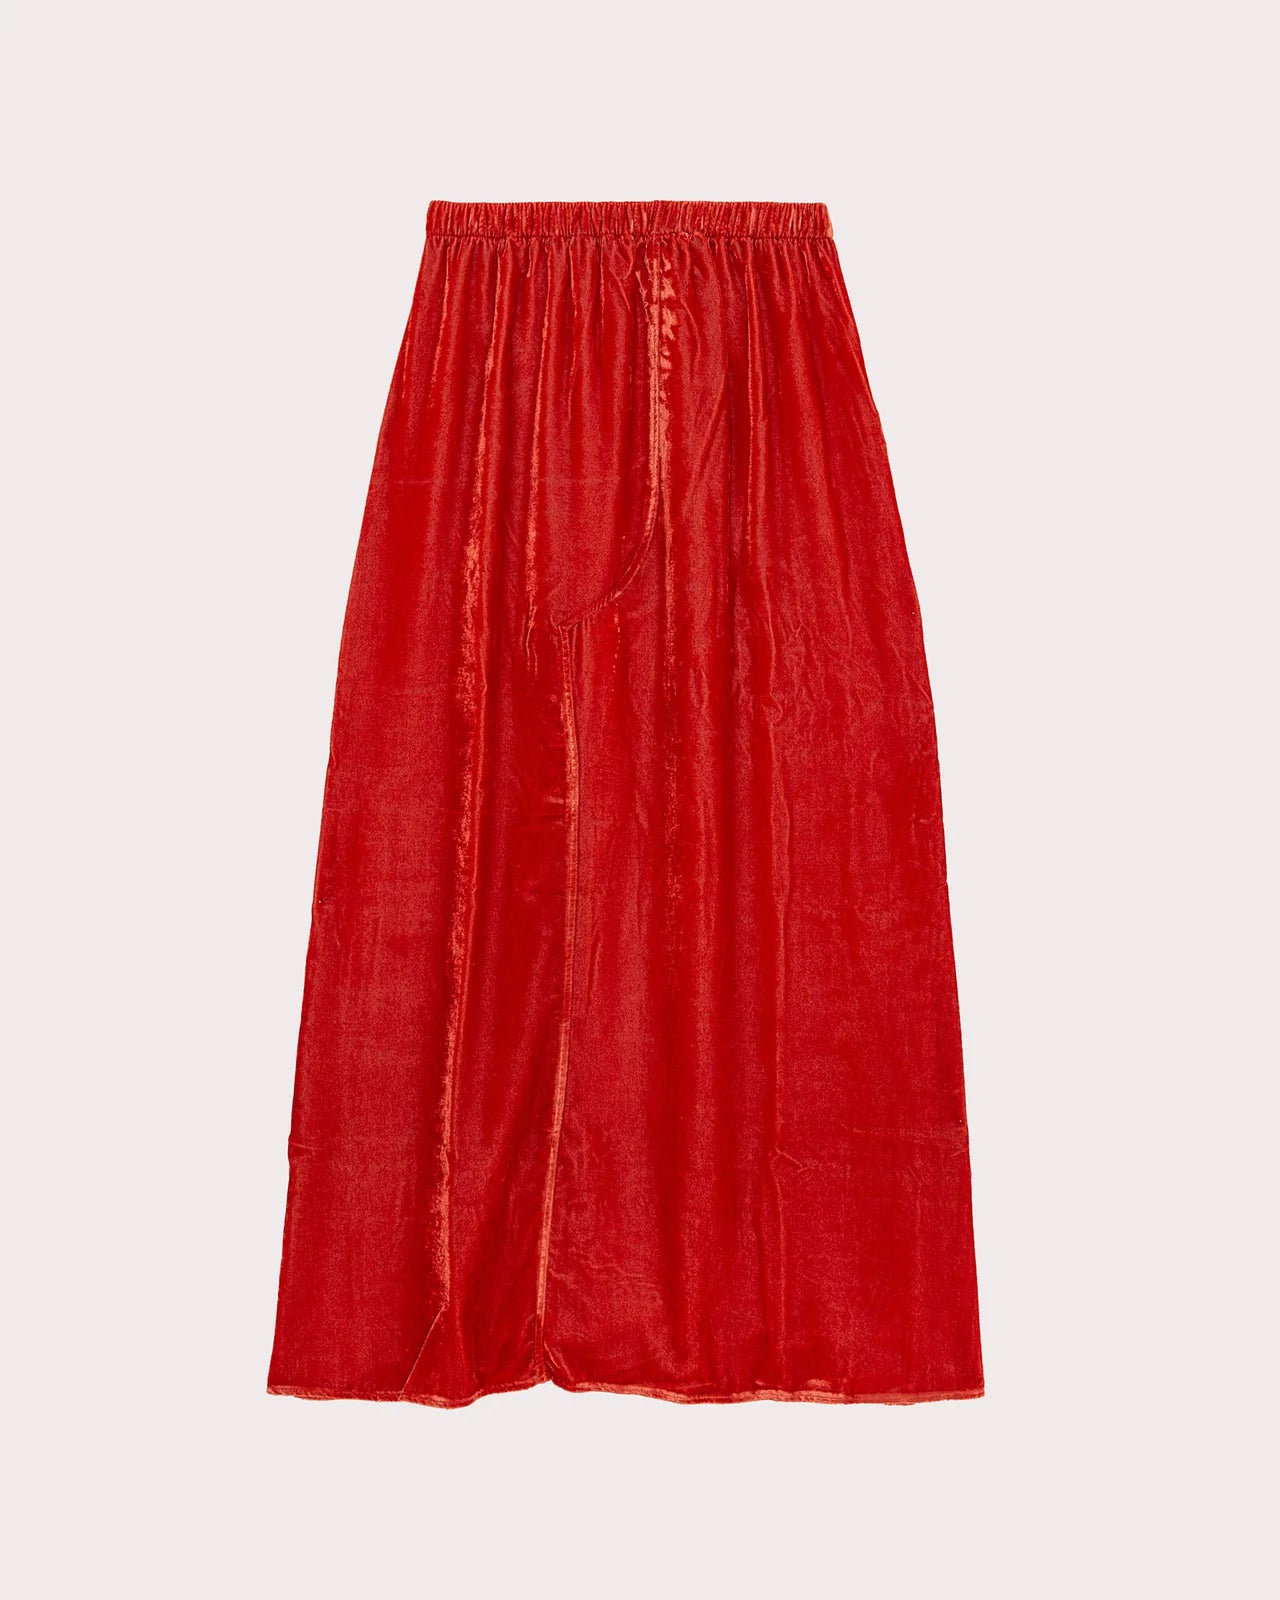 Ocu Skirt in Ro Rust